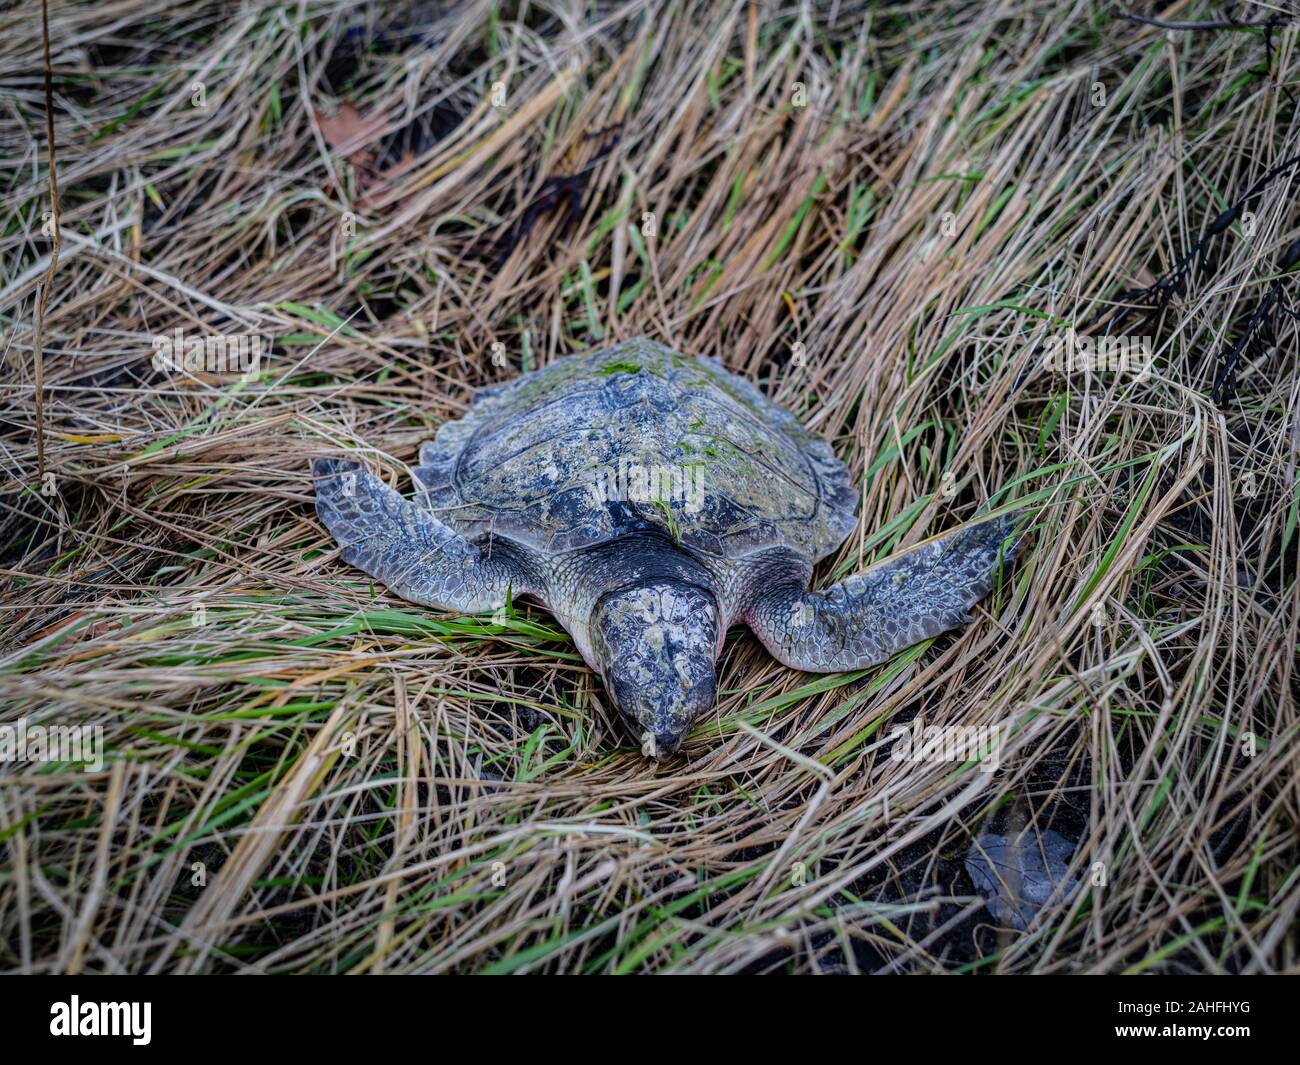 Una tortuga de mar Muerto Kemps Ridley sobre la hierba Foto de stock